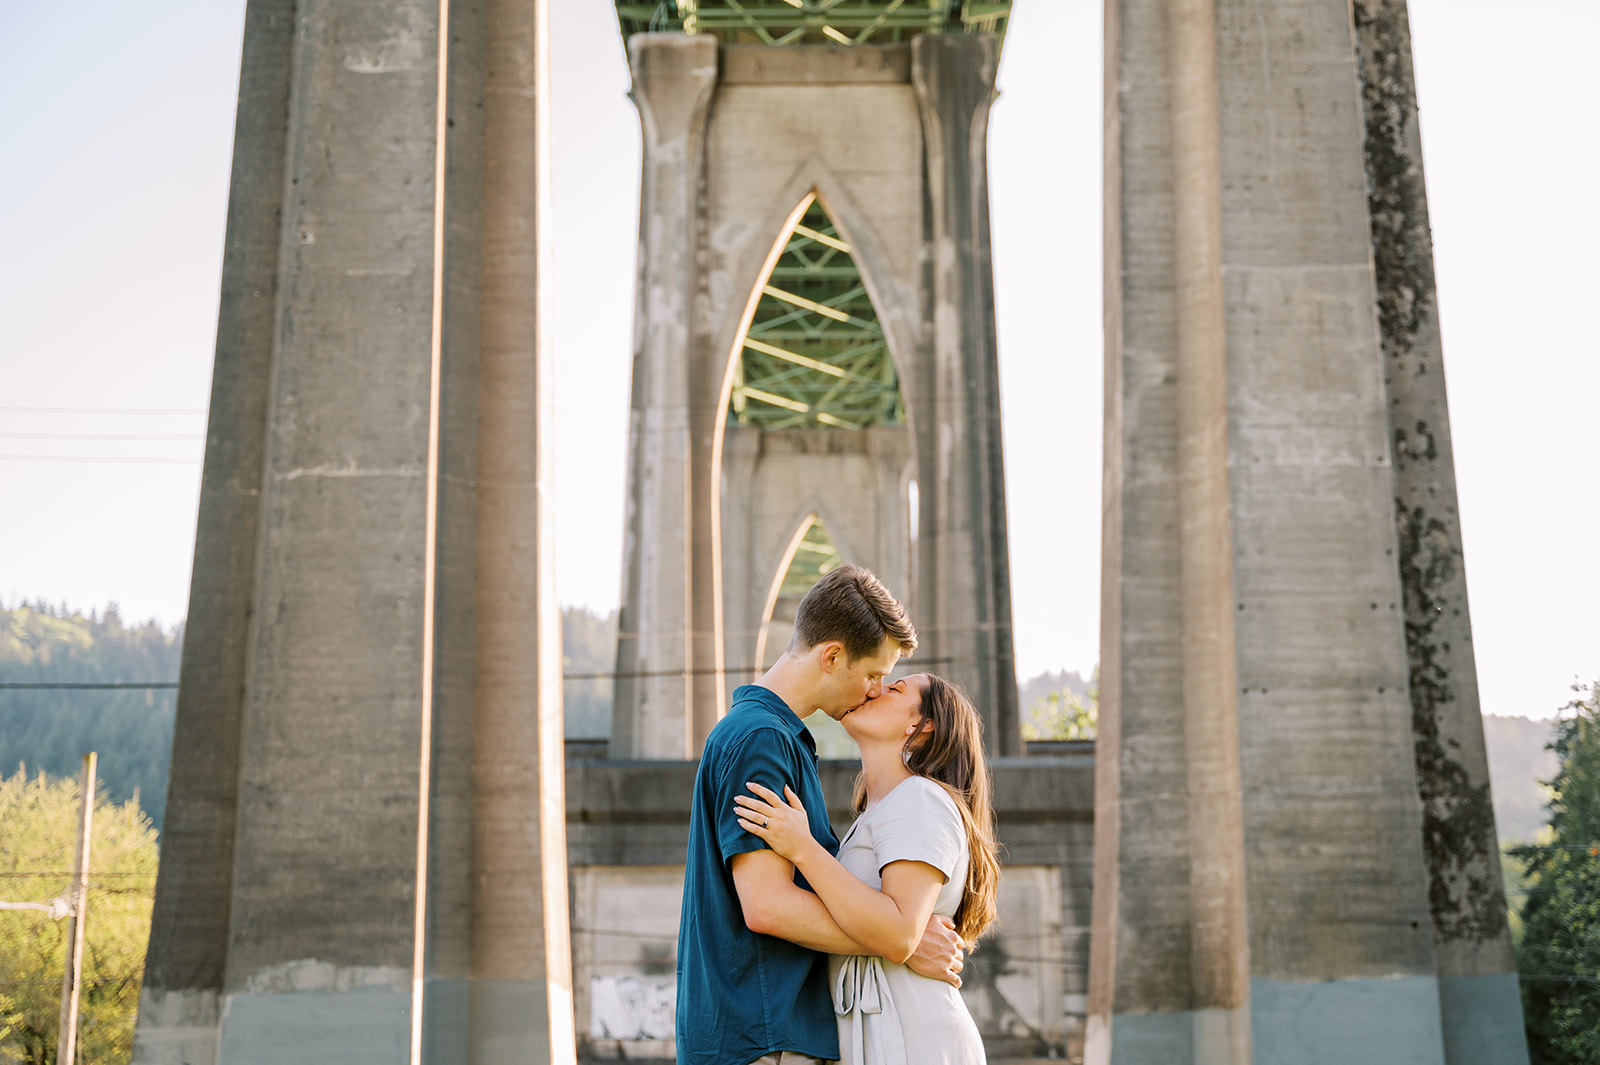 Wedding photographer Portland Oregon Engagement session Cathedral Park St. Johns Bridge